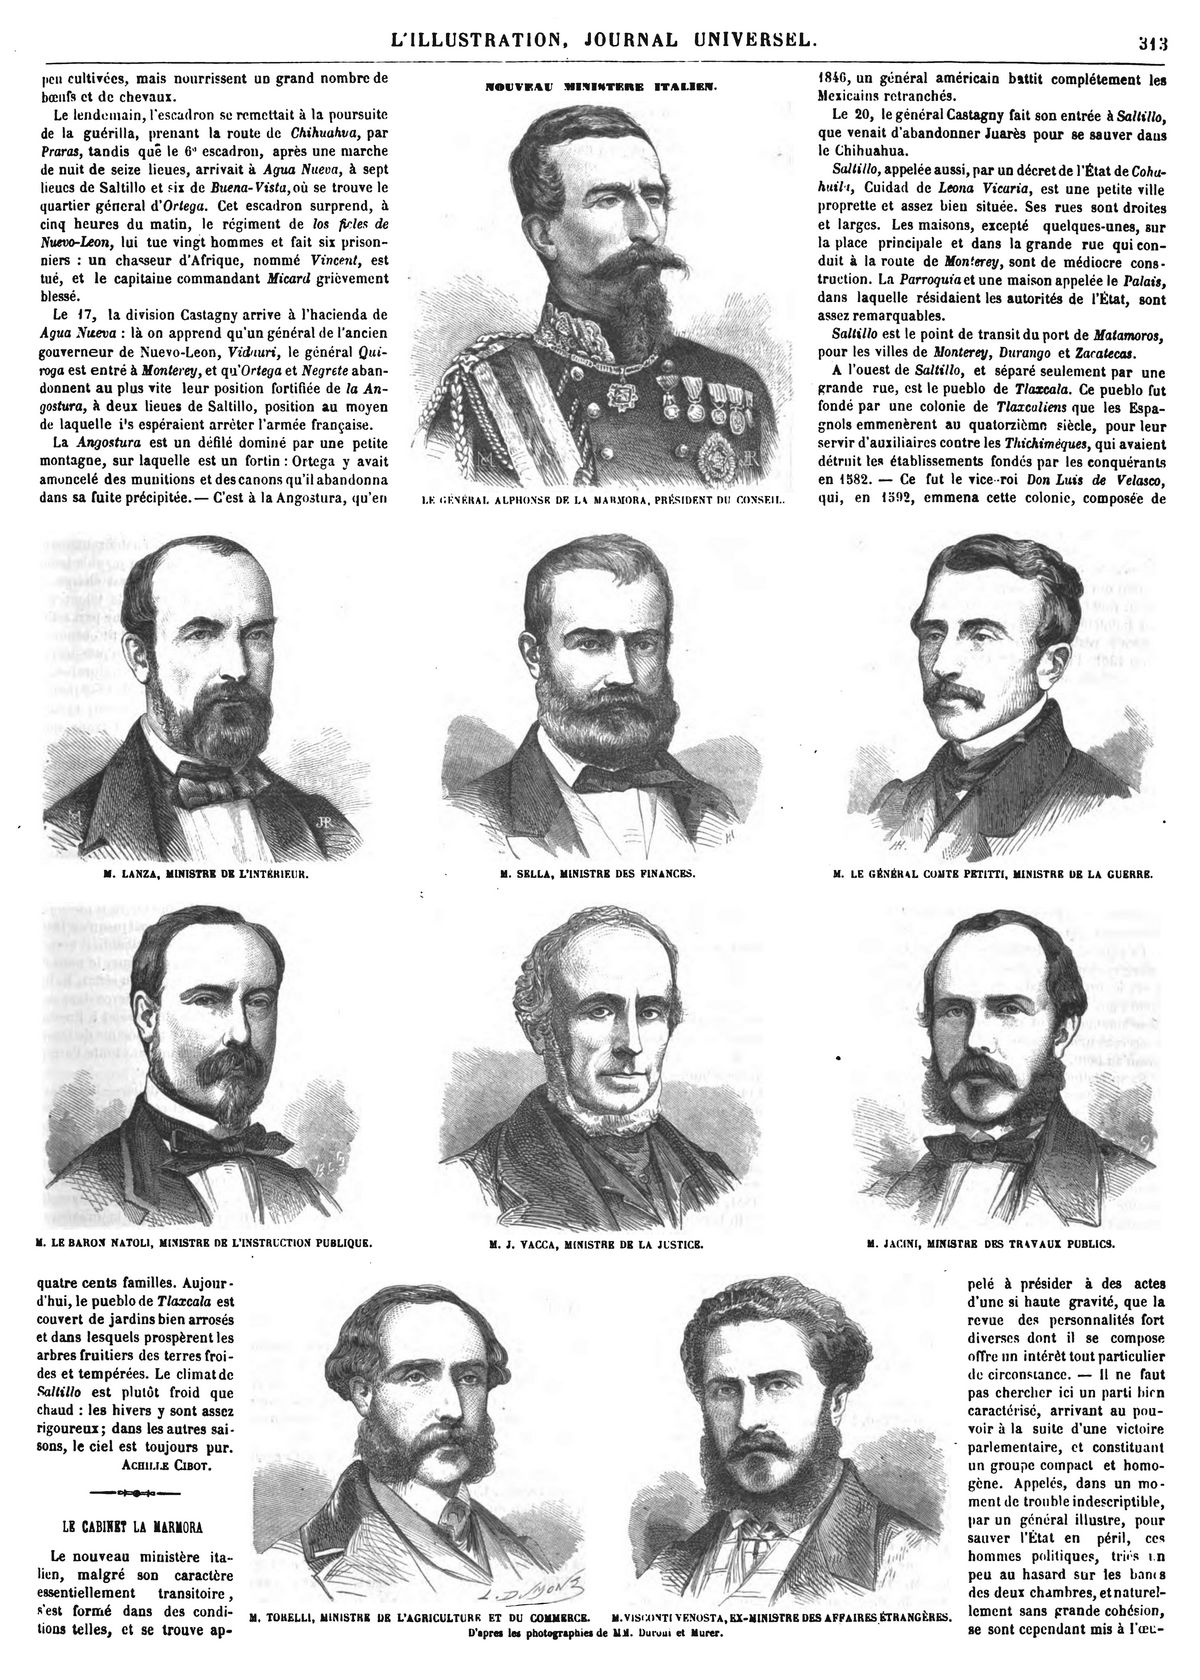 Le cabinet La Marmora (9 gravures). Italie 1864